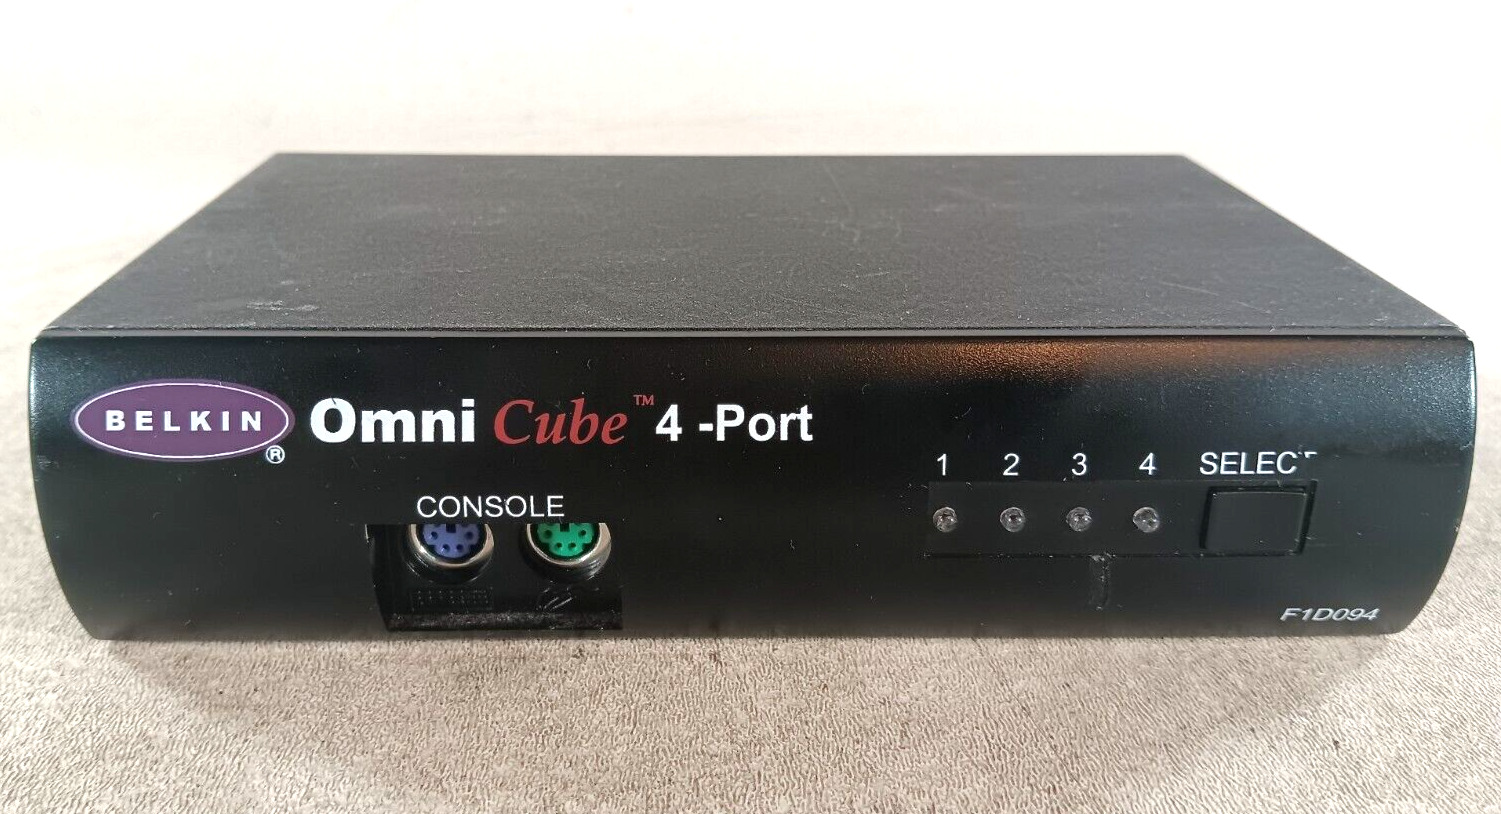 Belkin Omni Cube 4-Port F1D094 KVM Switch - No Power Cord